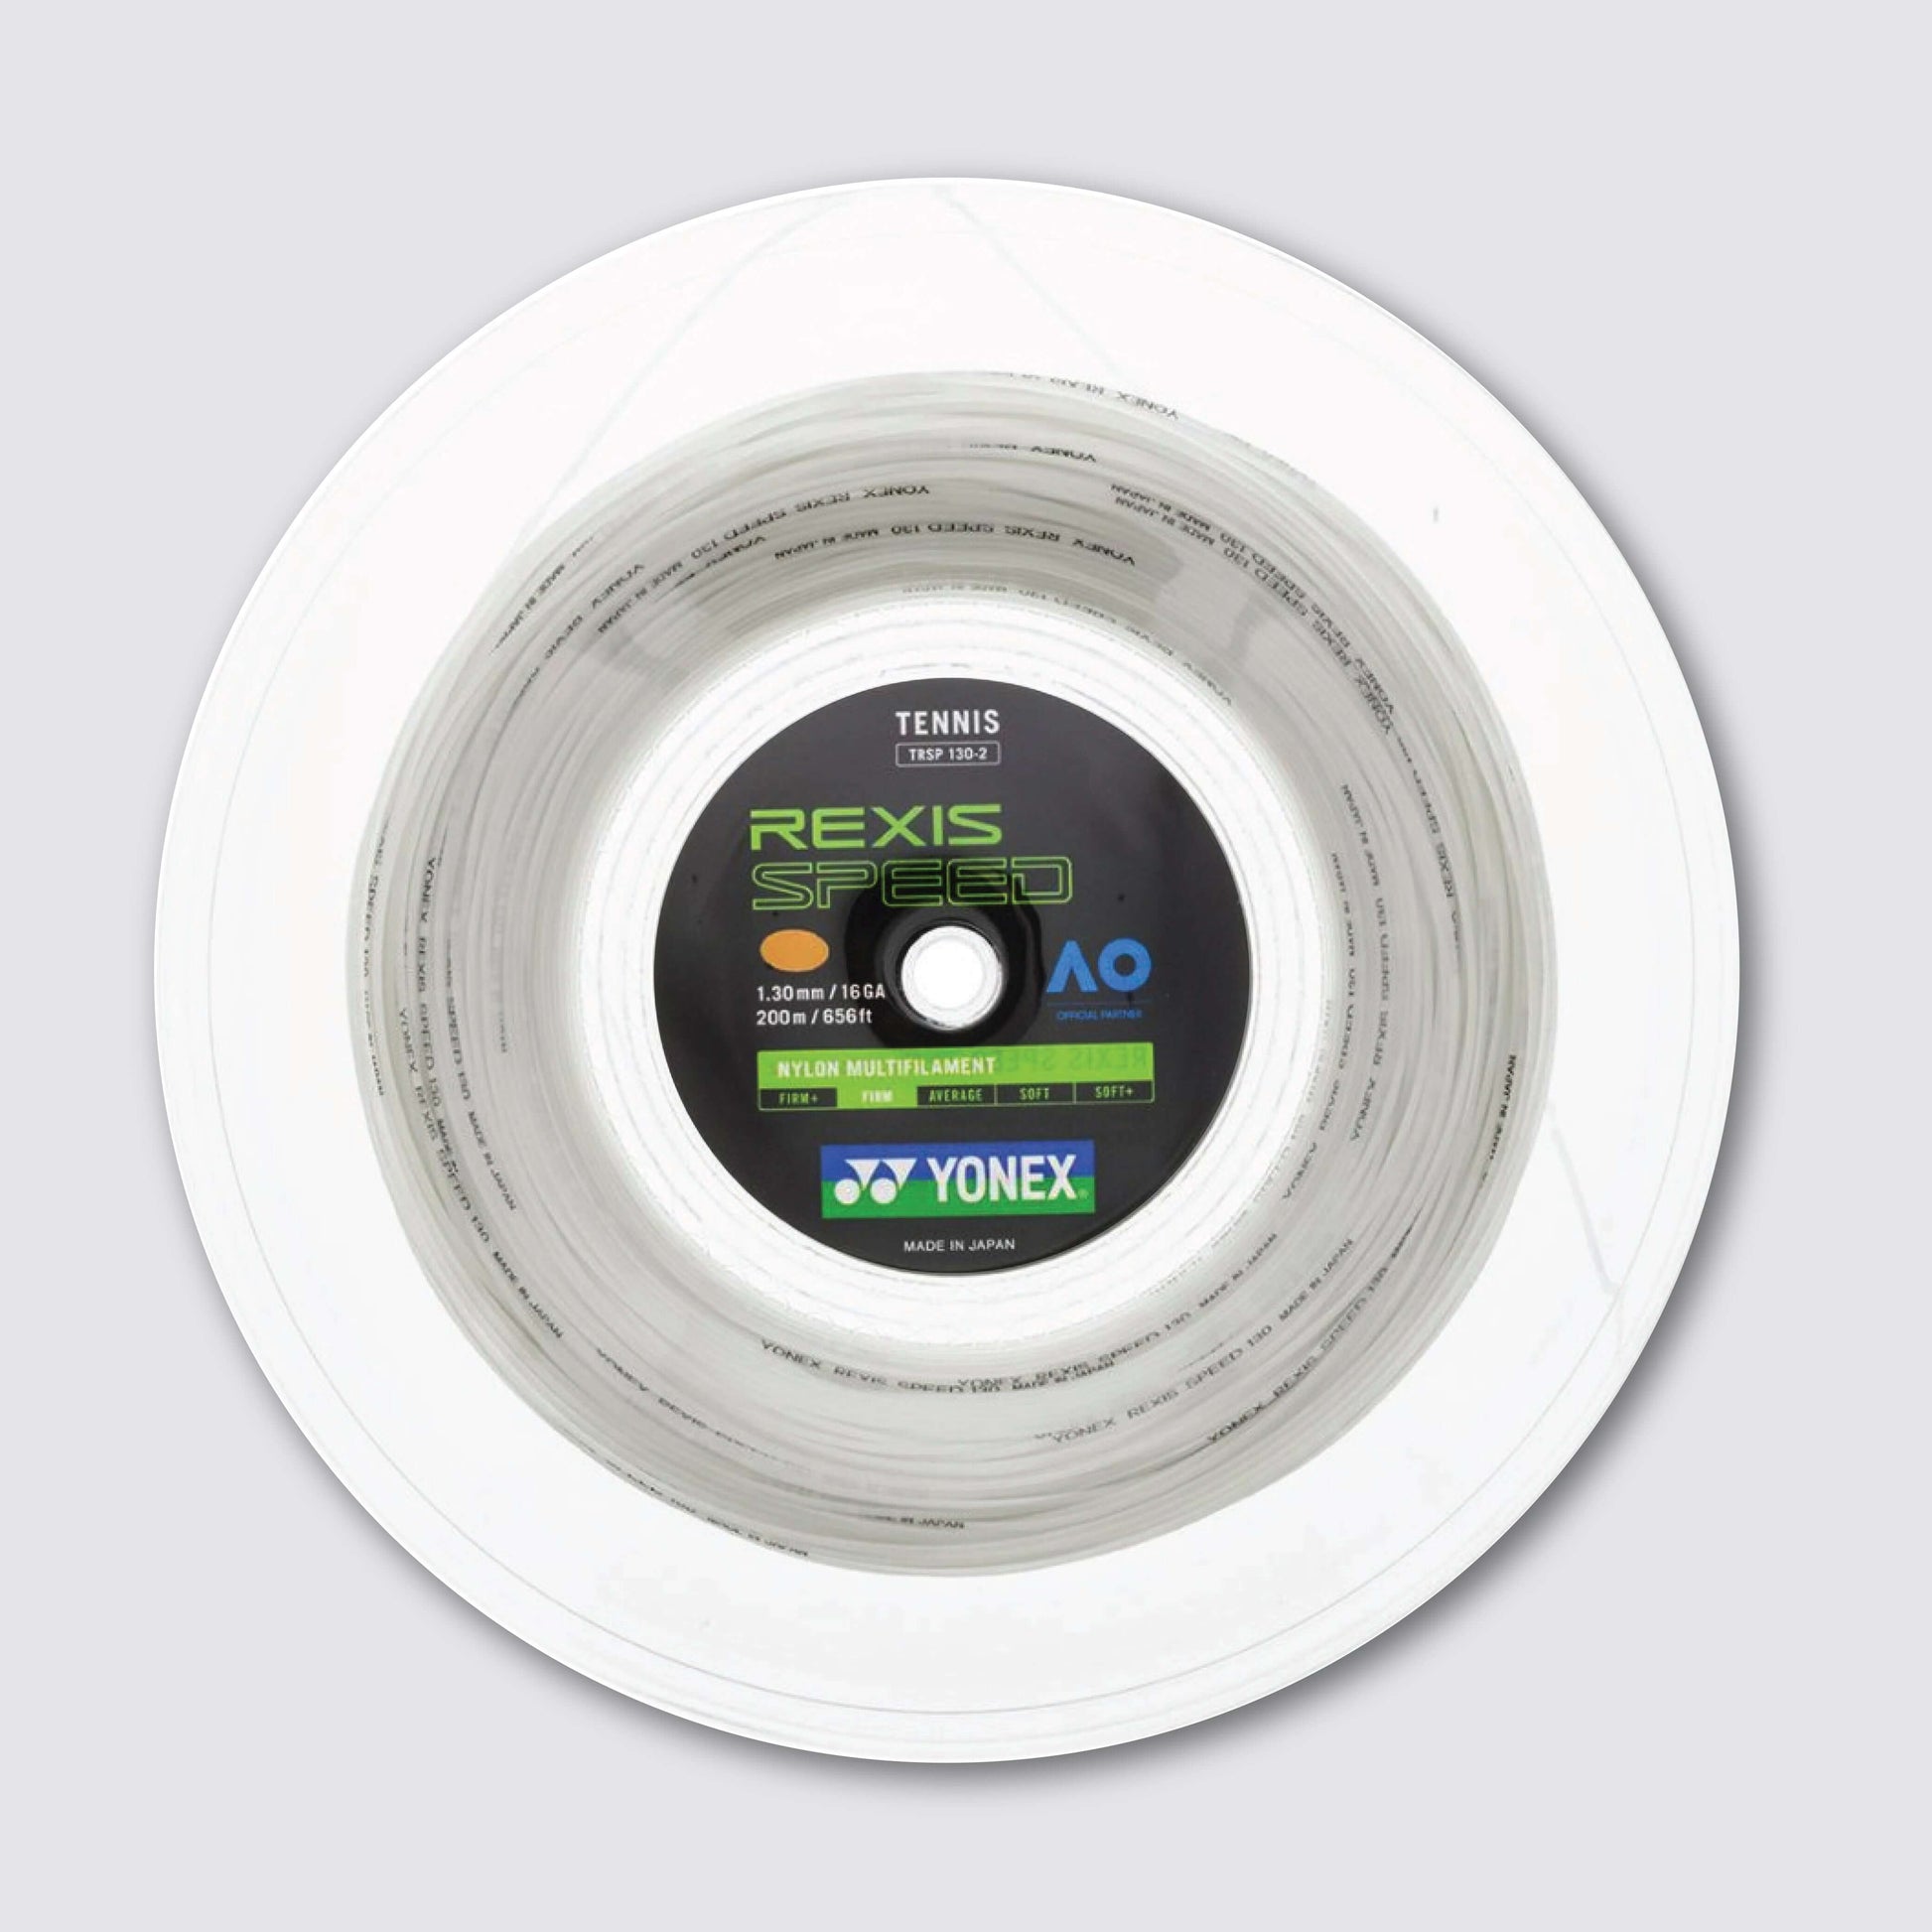 Yonex Rexis Speed 130 / 16 200m  Tennis String Reel (White)